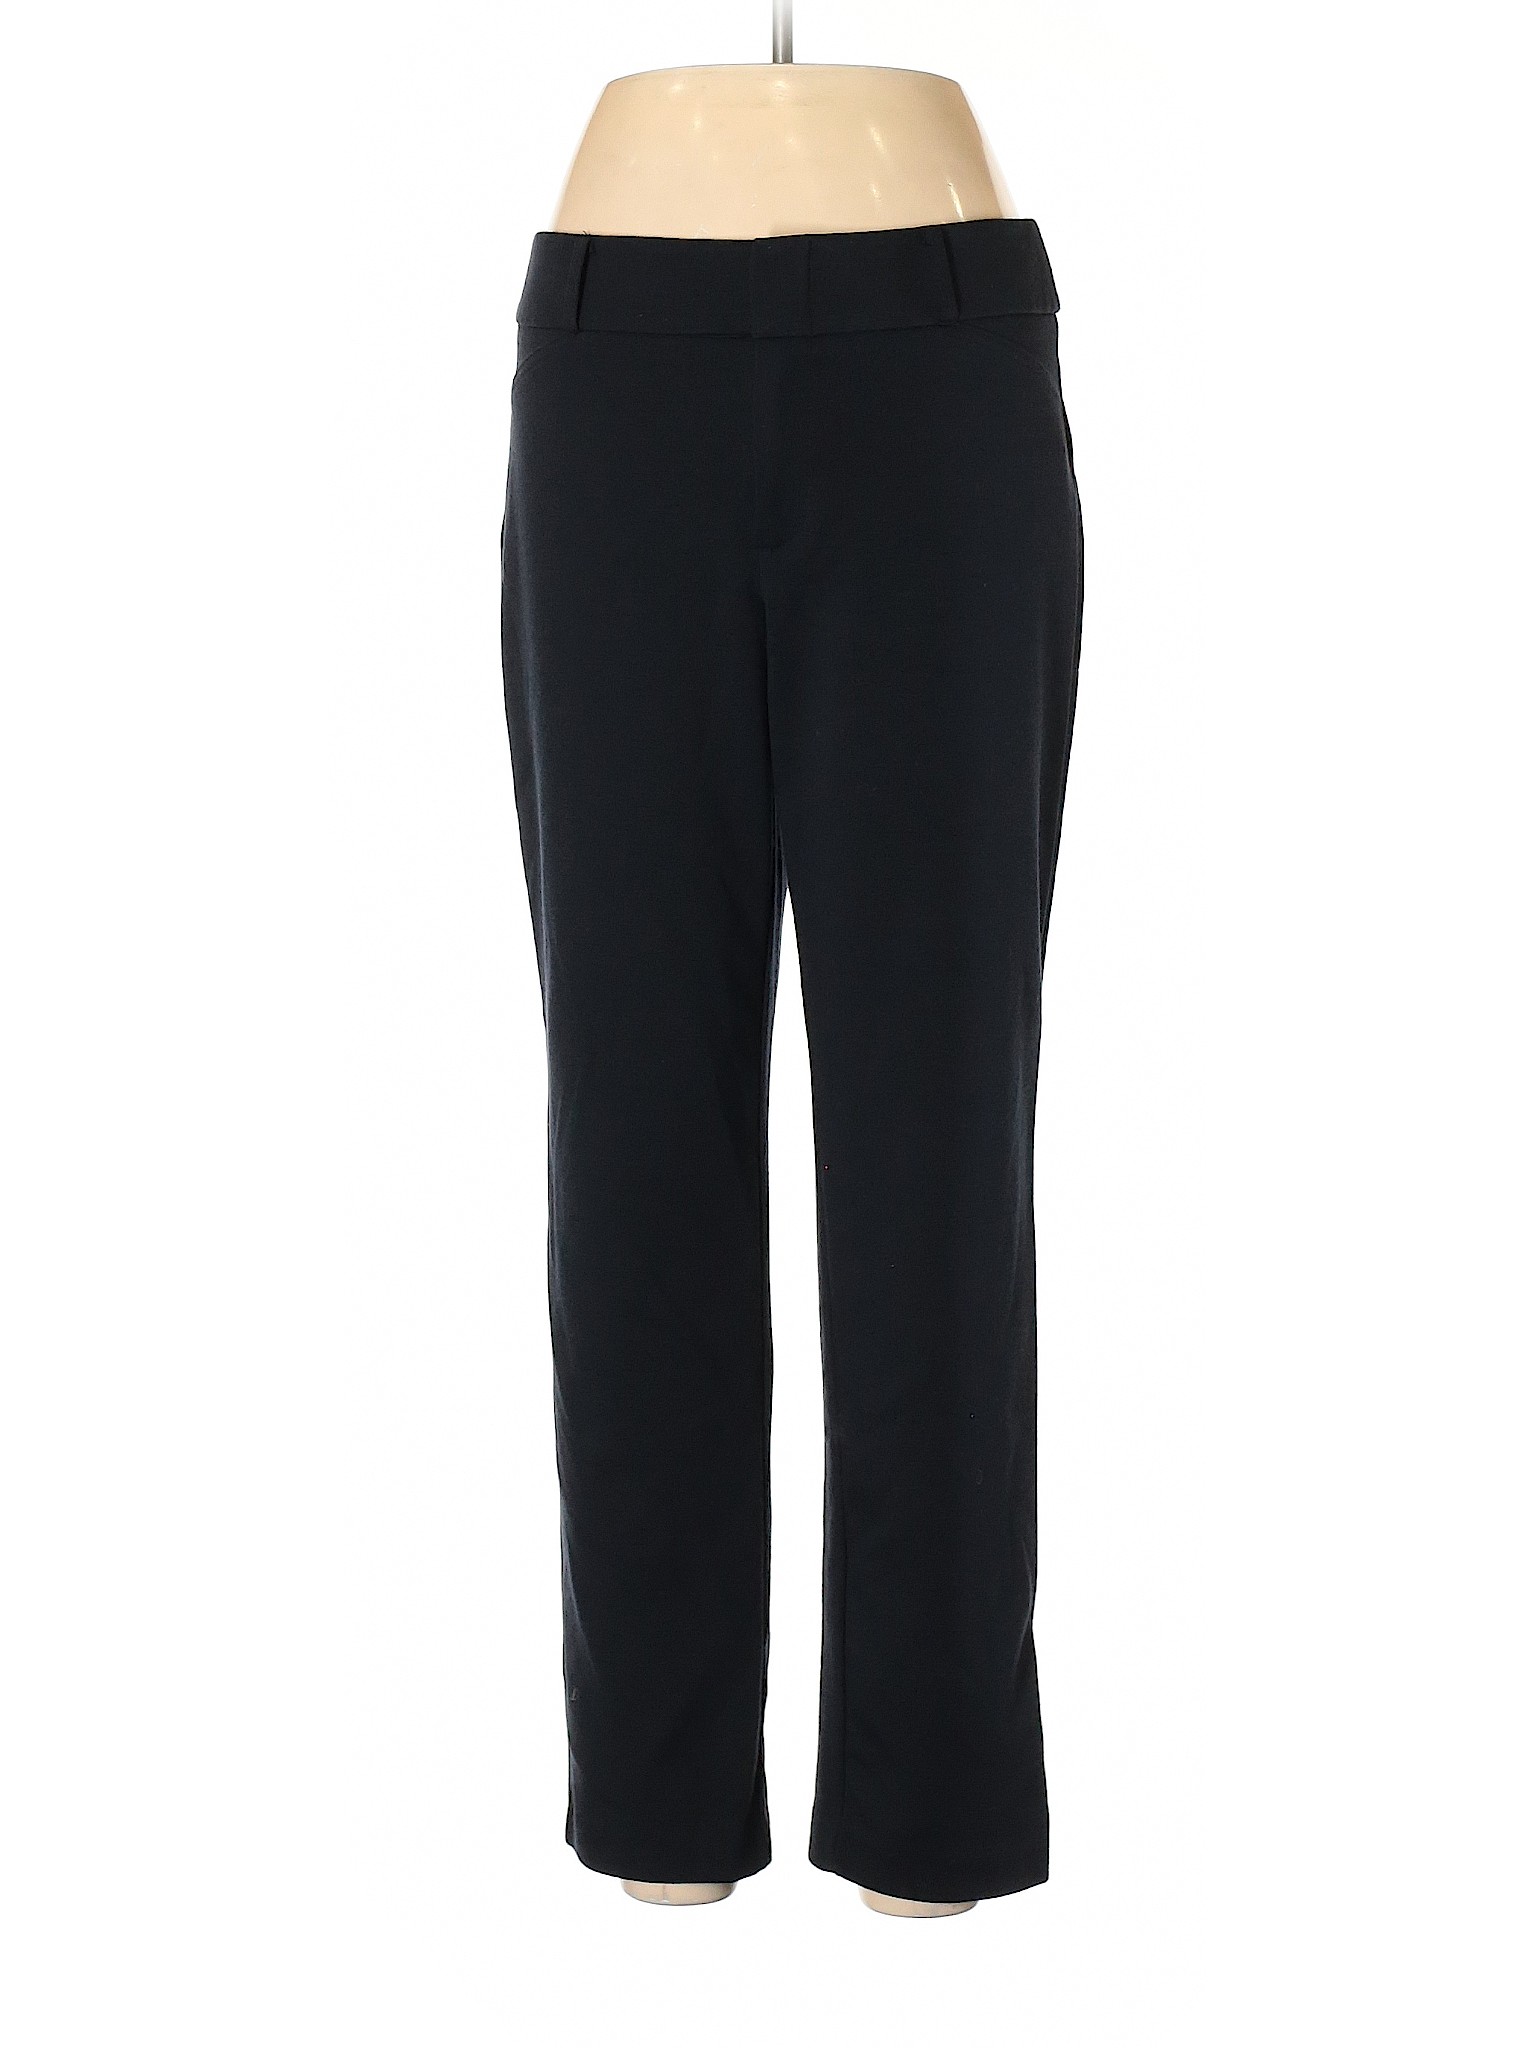 MICHAEL Michael Kors Women Black Casual Pants 8 | eBay